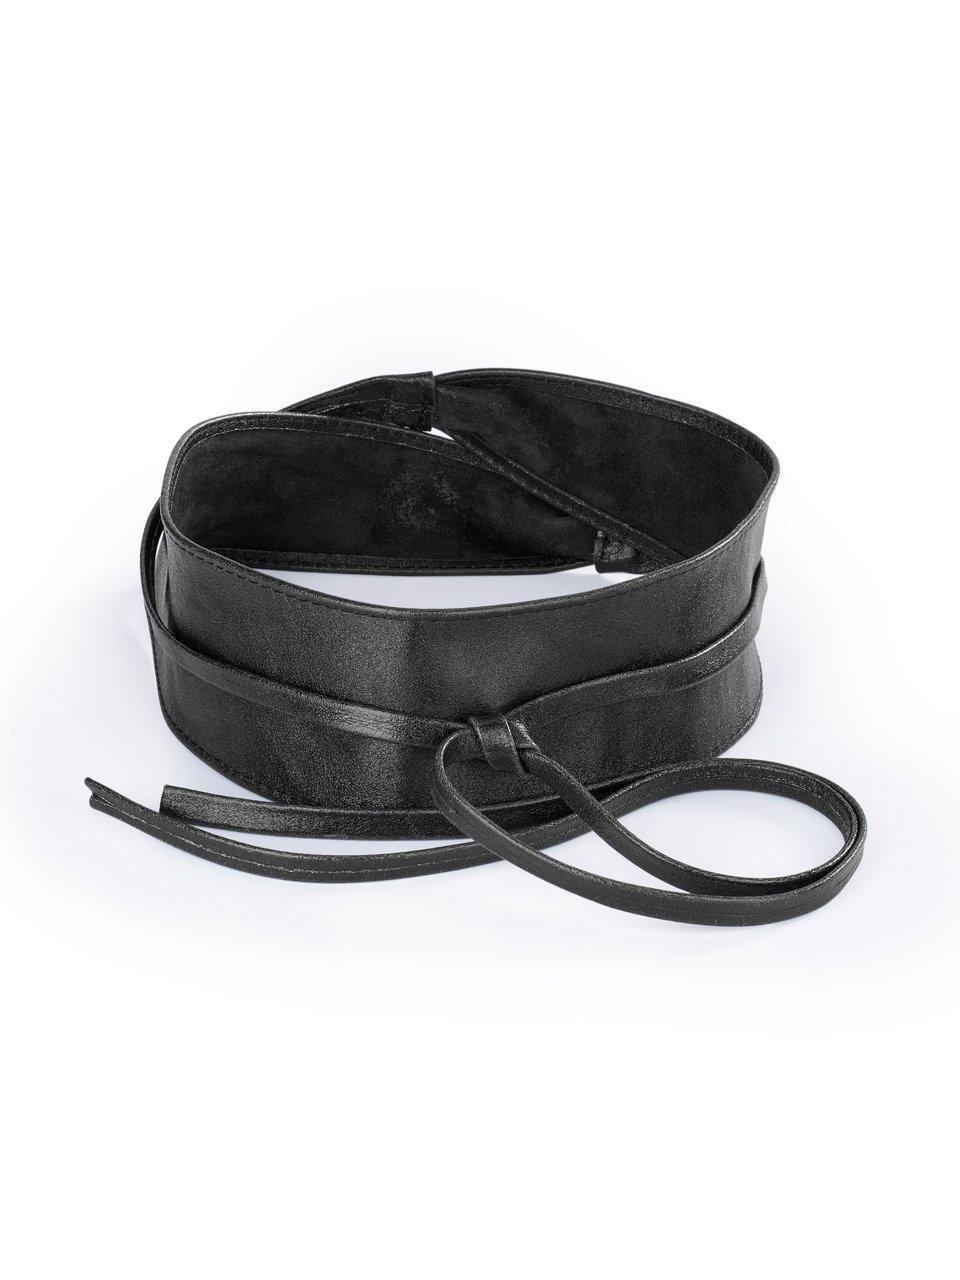 Image of Nappa leather belt Uta Raasch black